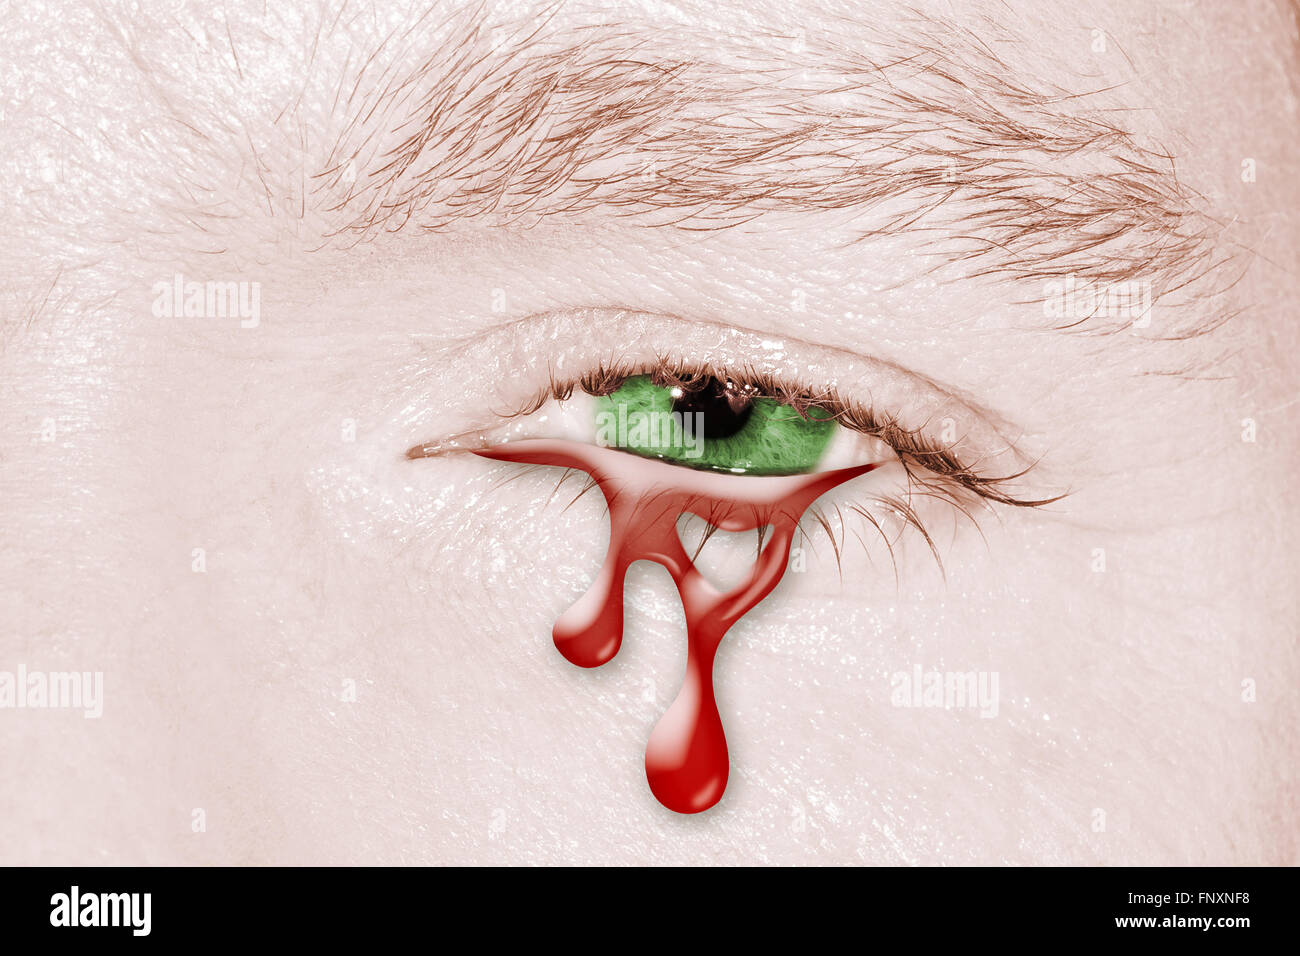 Blood Crying eye Stock Photo - Alamy